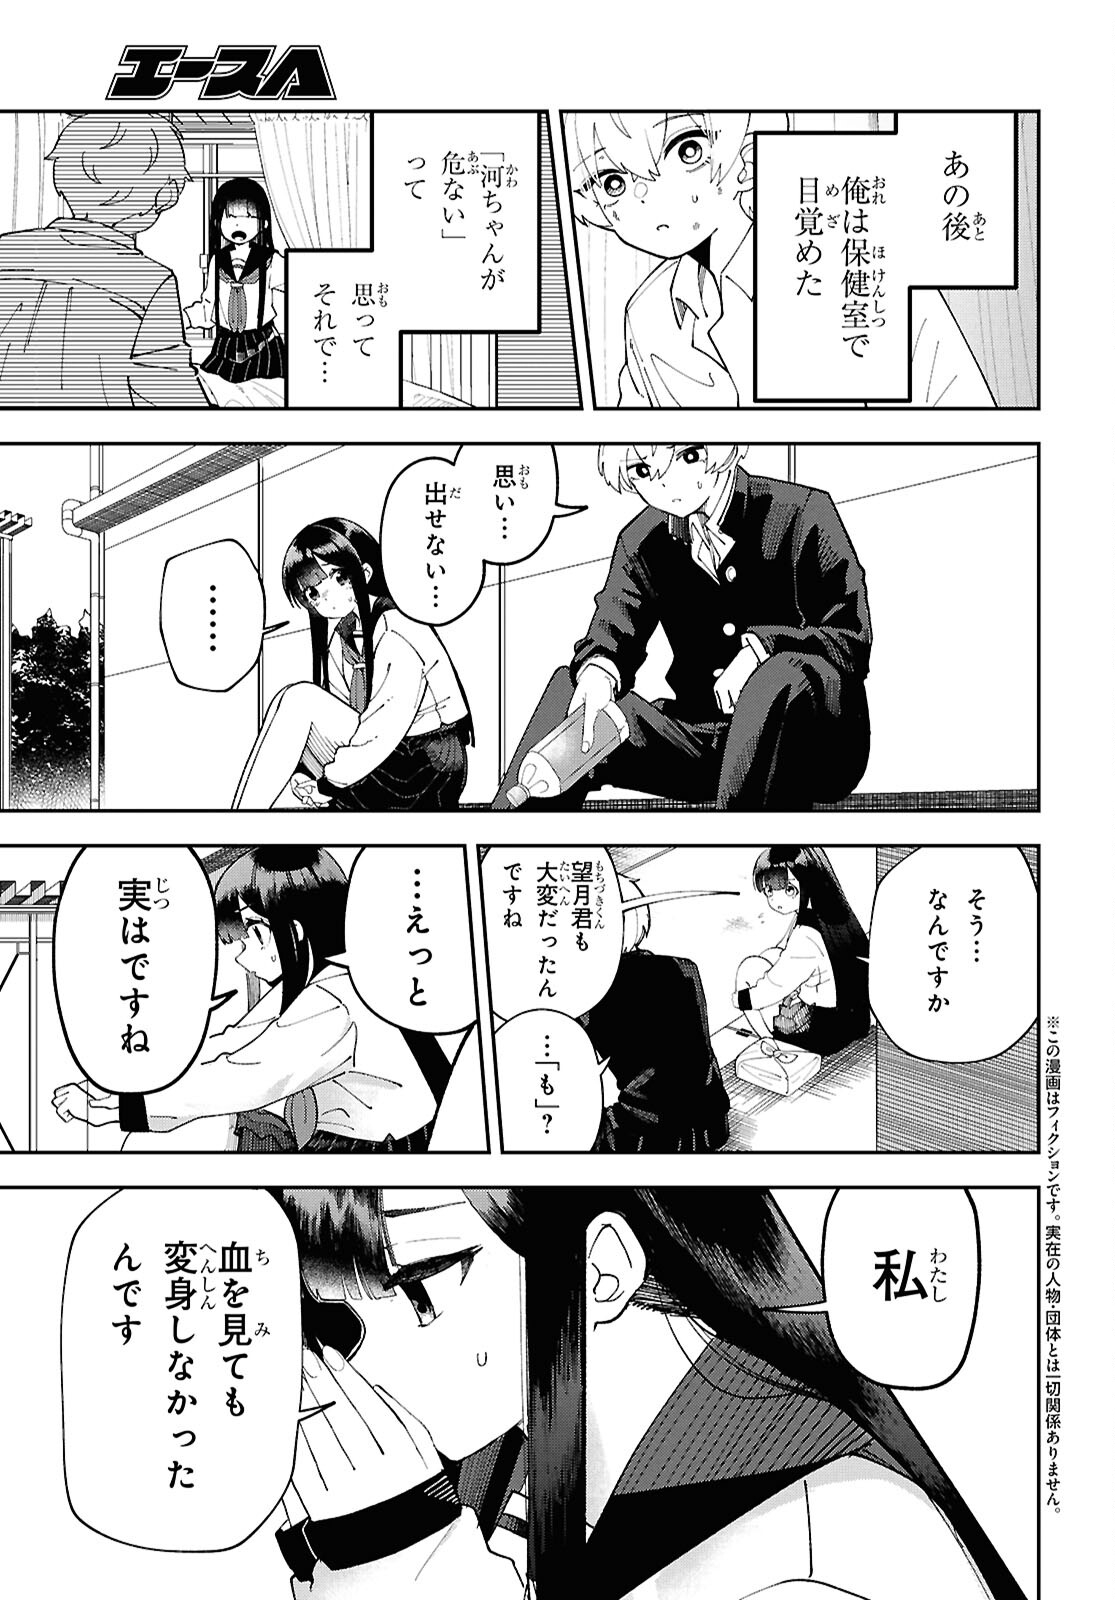 Garuru Girl - Chapter 4 - Page 3